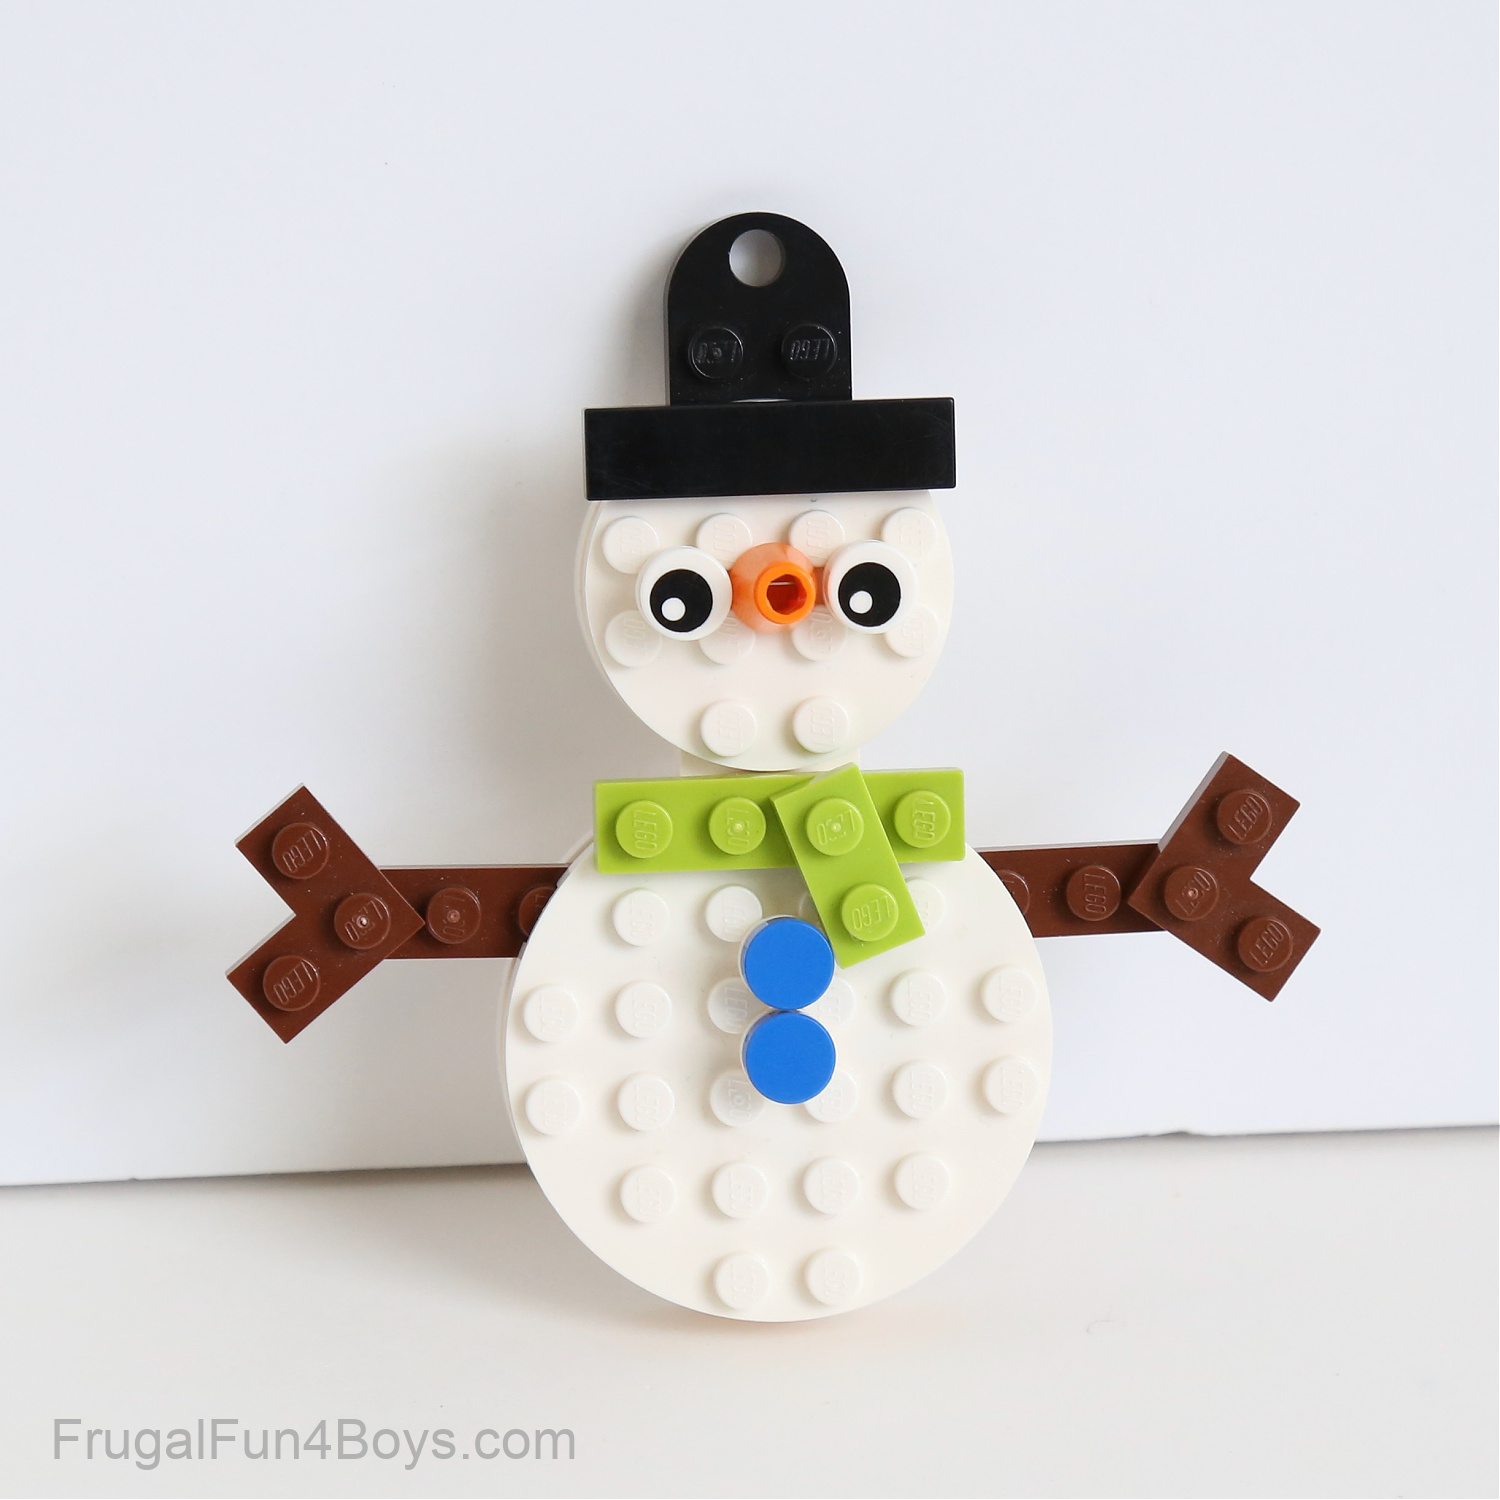 build LEGO Christmas ornaments - snowman